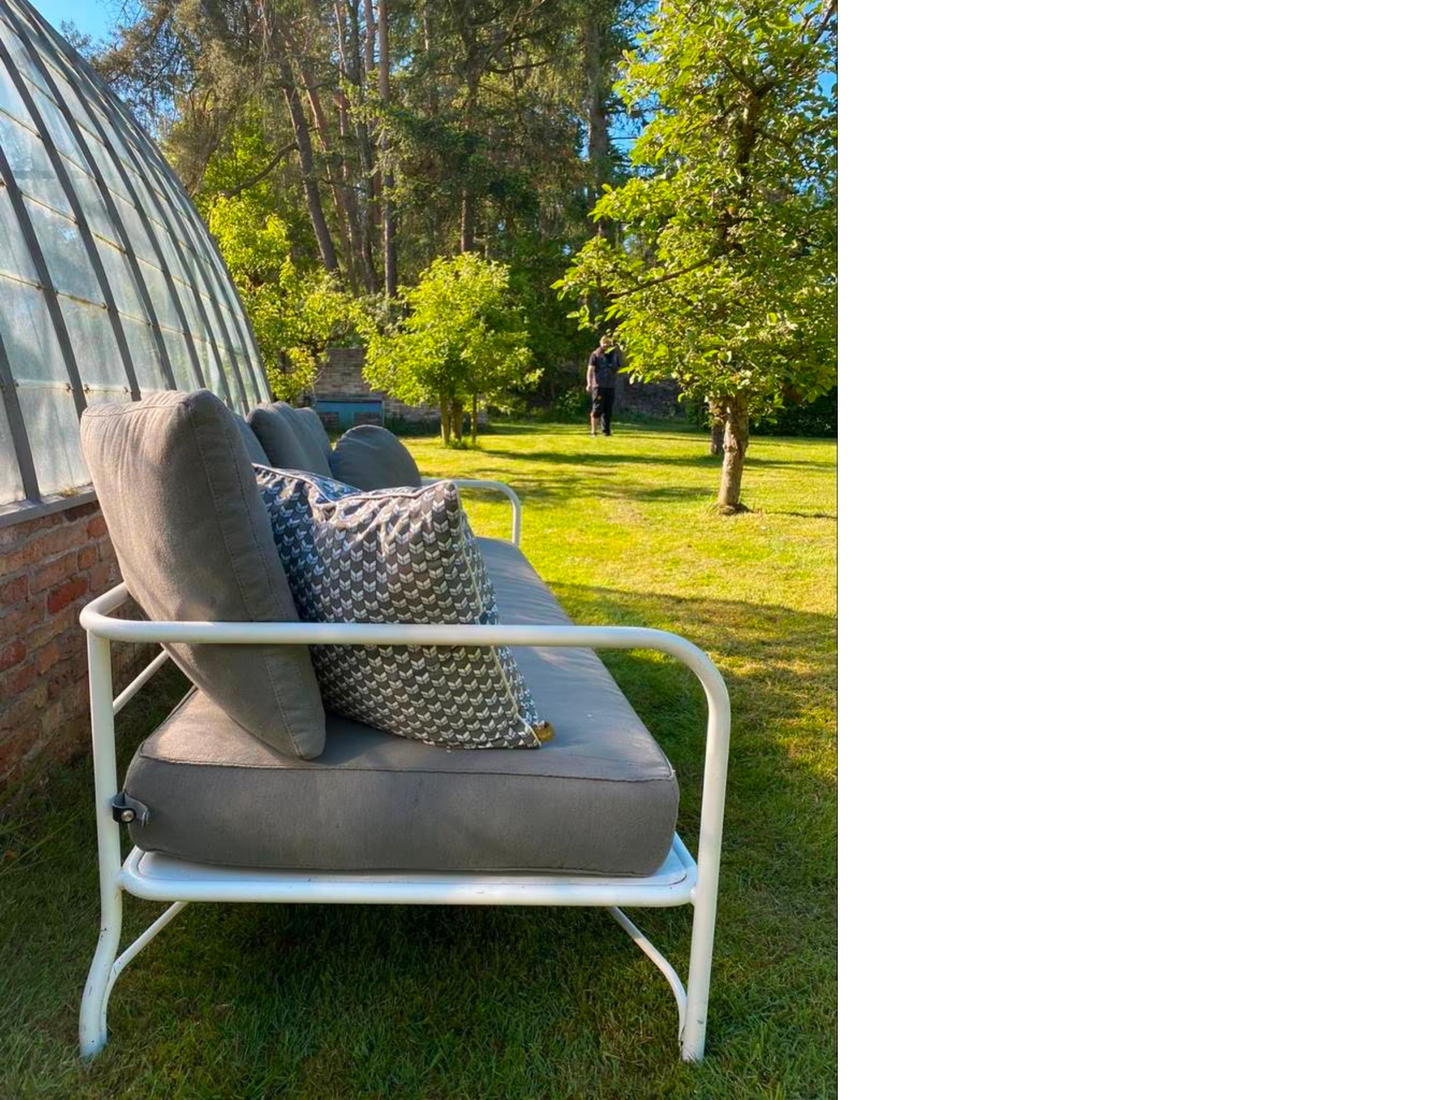 Zgan Minotti “Le Parc” white outdoor garden bench Nwe cushions